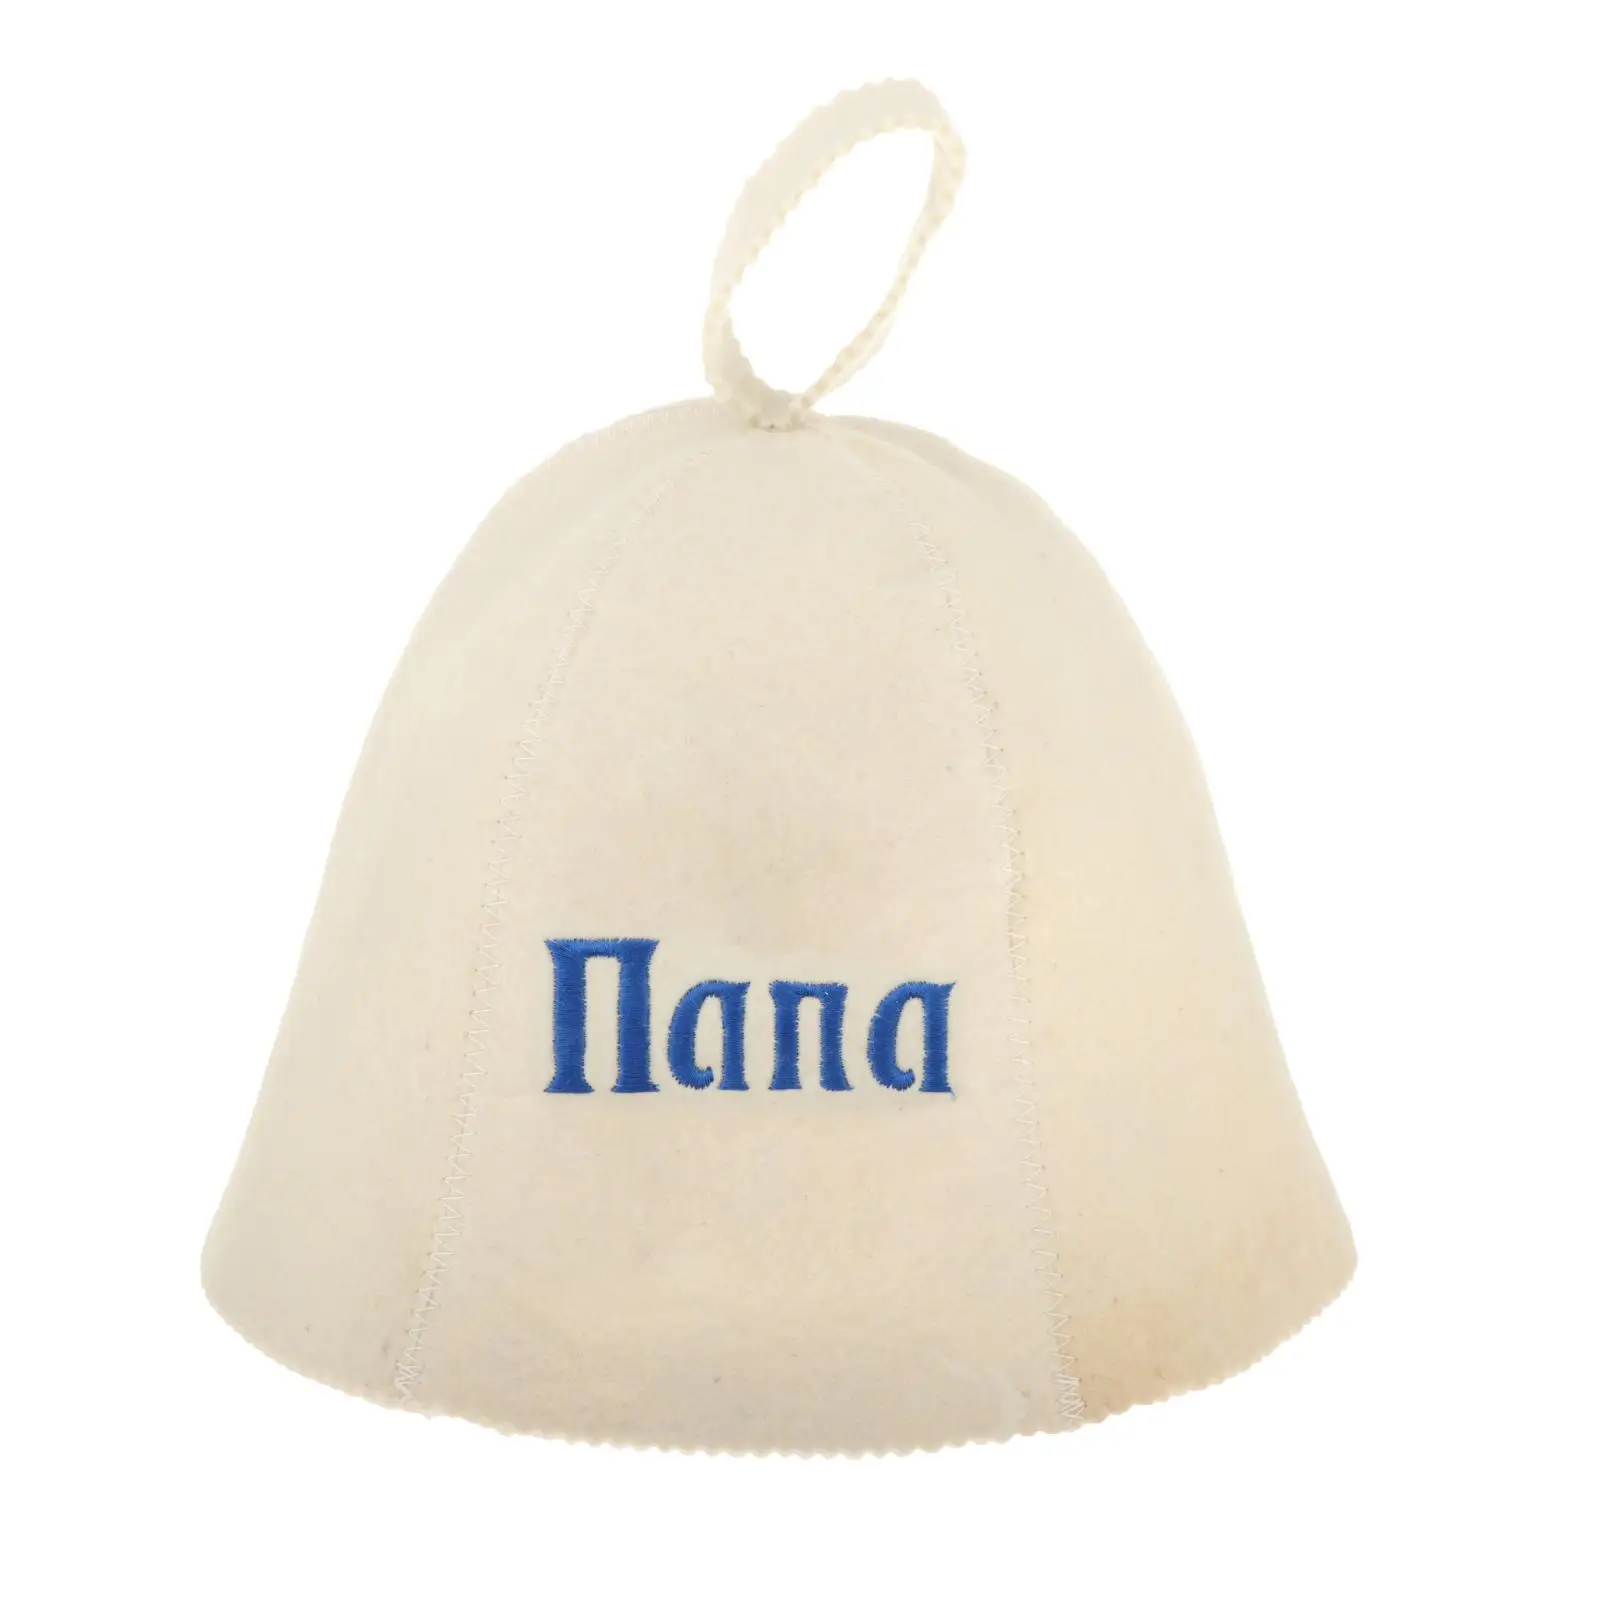 Wool Felt Sauna Hat Anti Heat Russian Banya Cap For Bath House Head Protection timberland skully